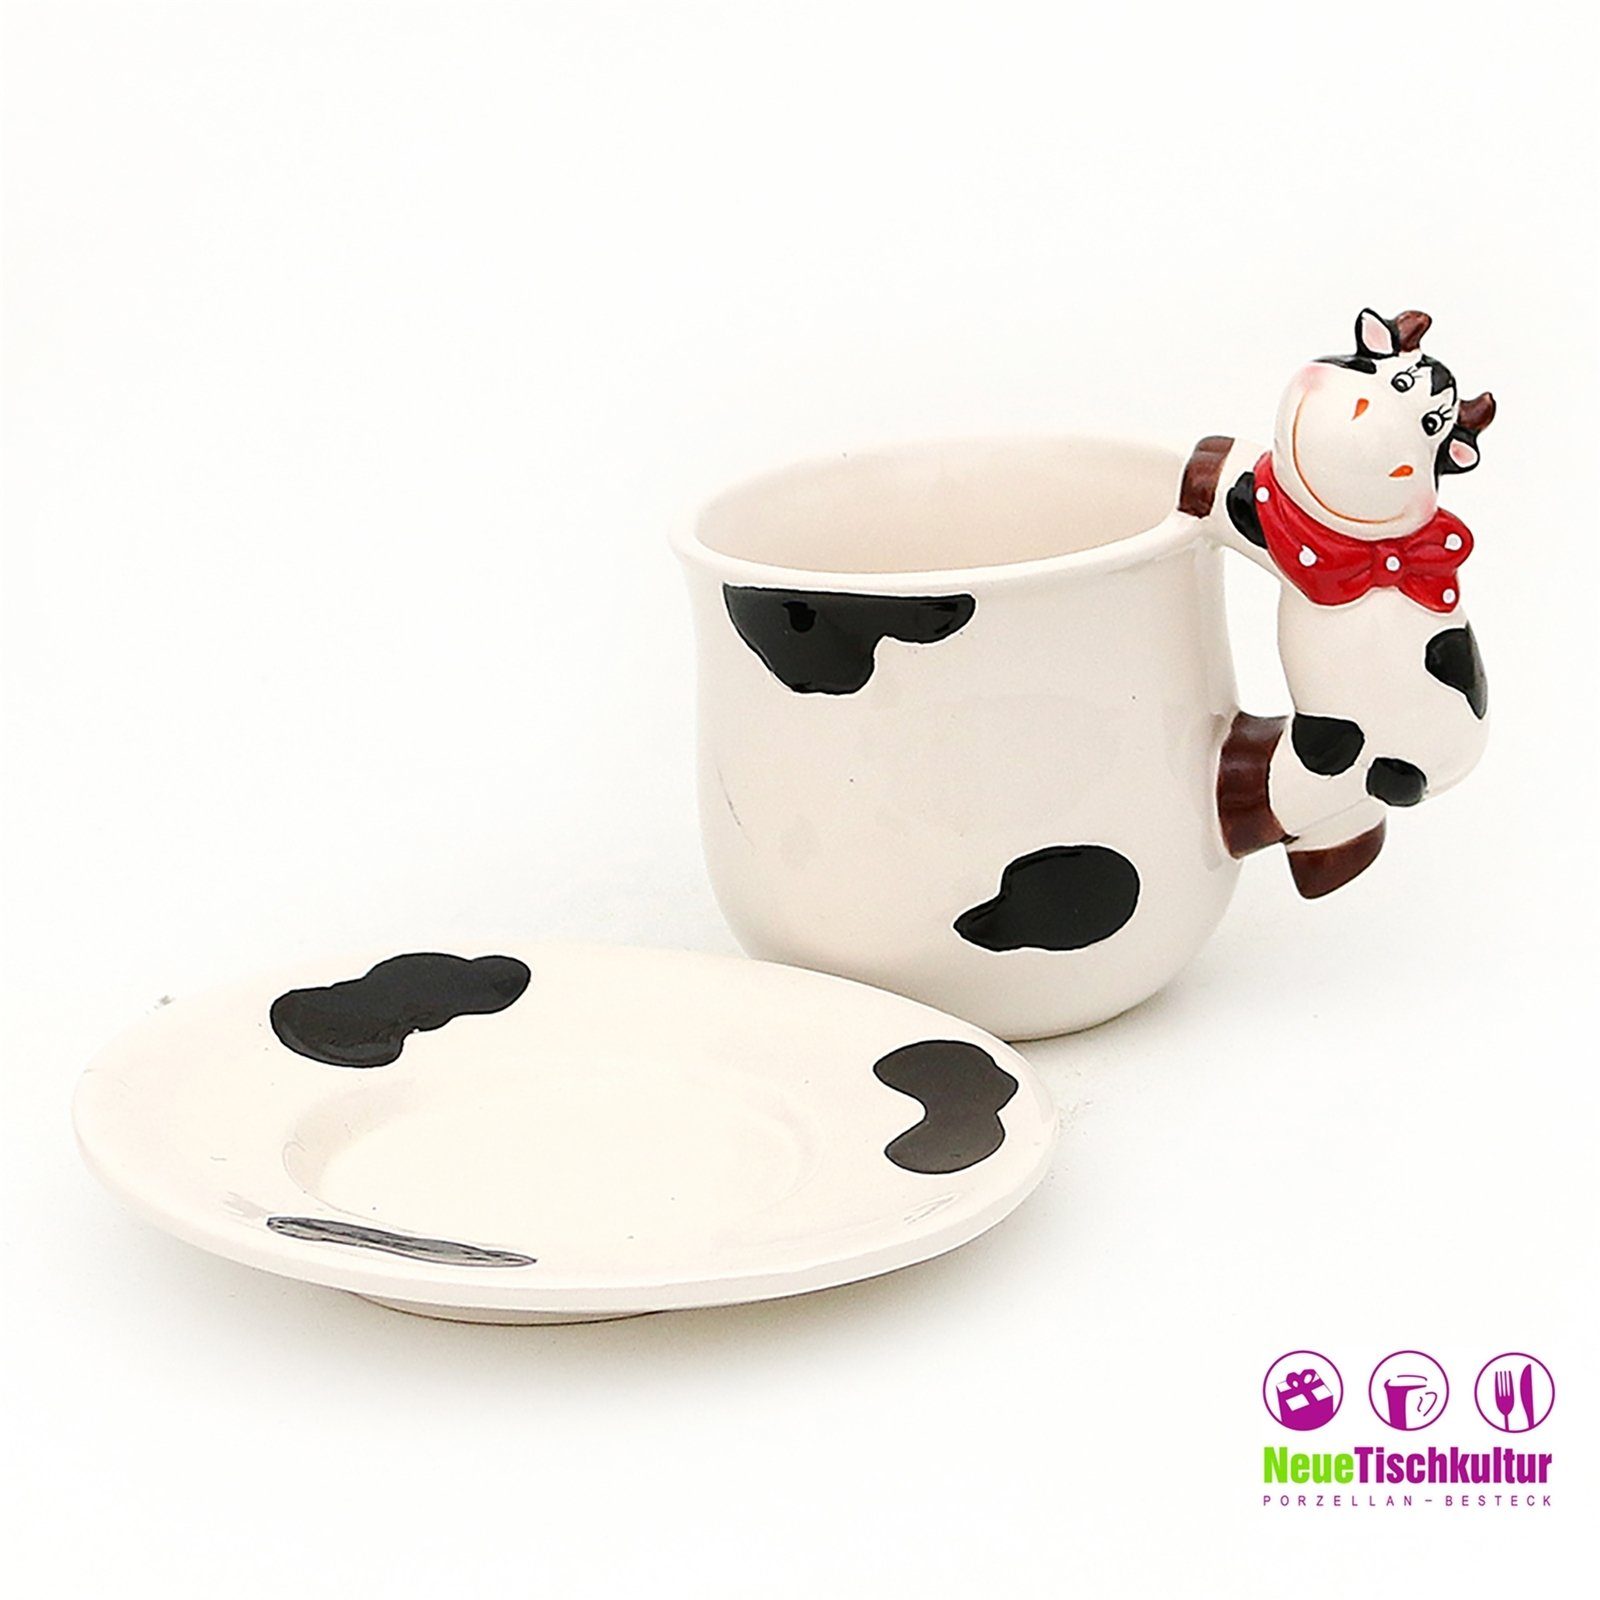 Tasse mit Kuh, Tasse Neuetischkultur Keramik Unterteller